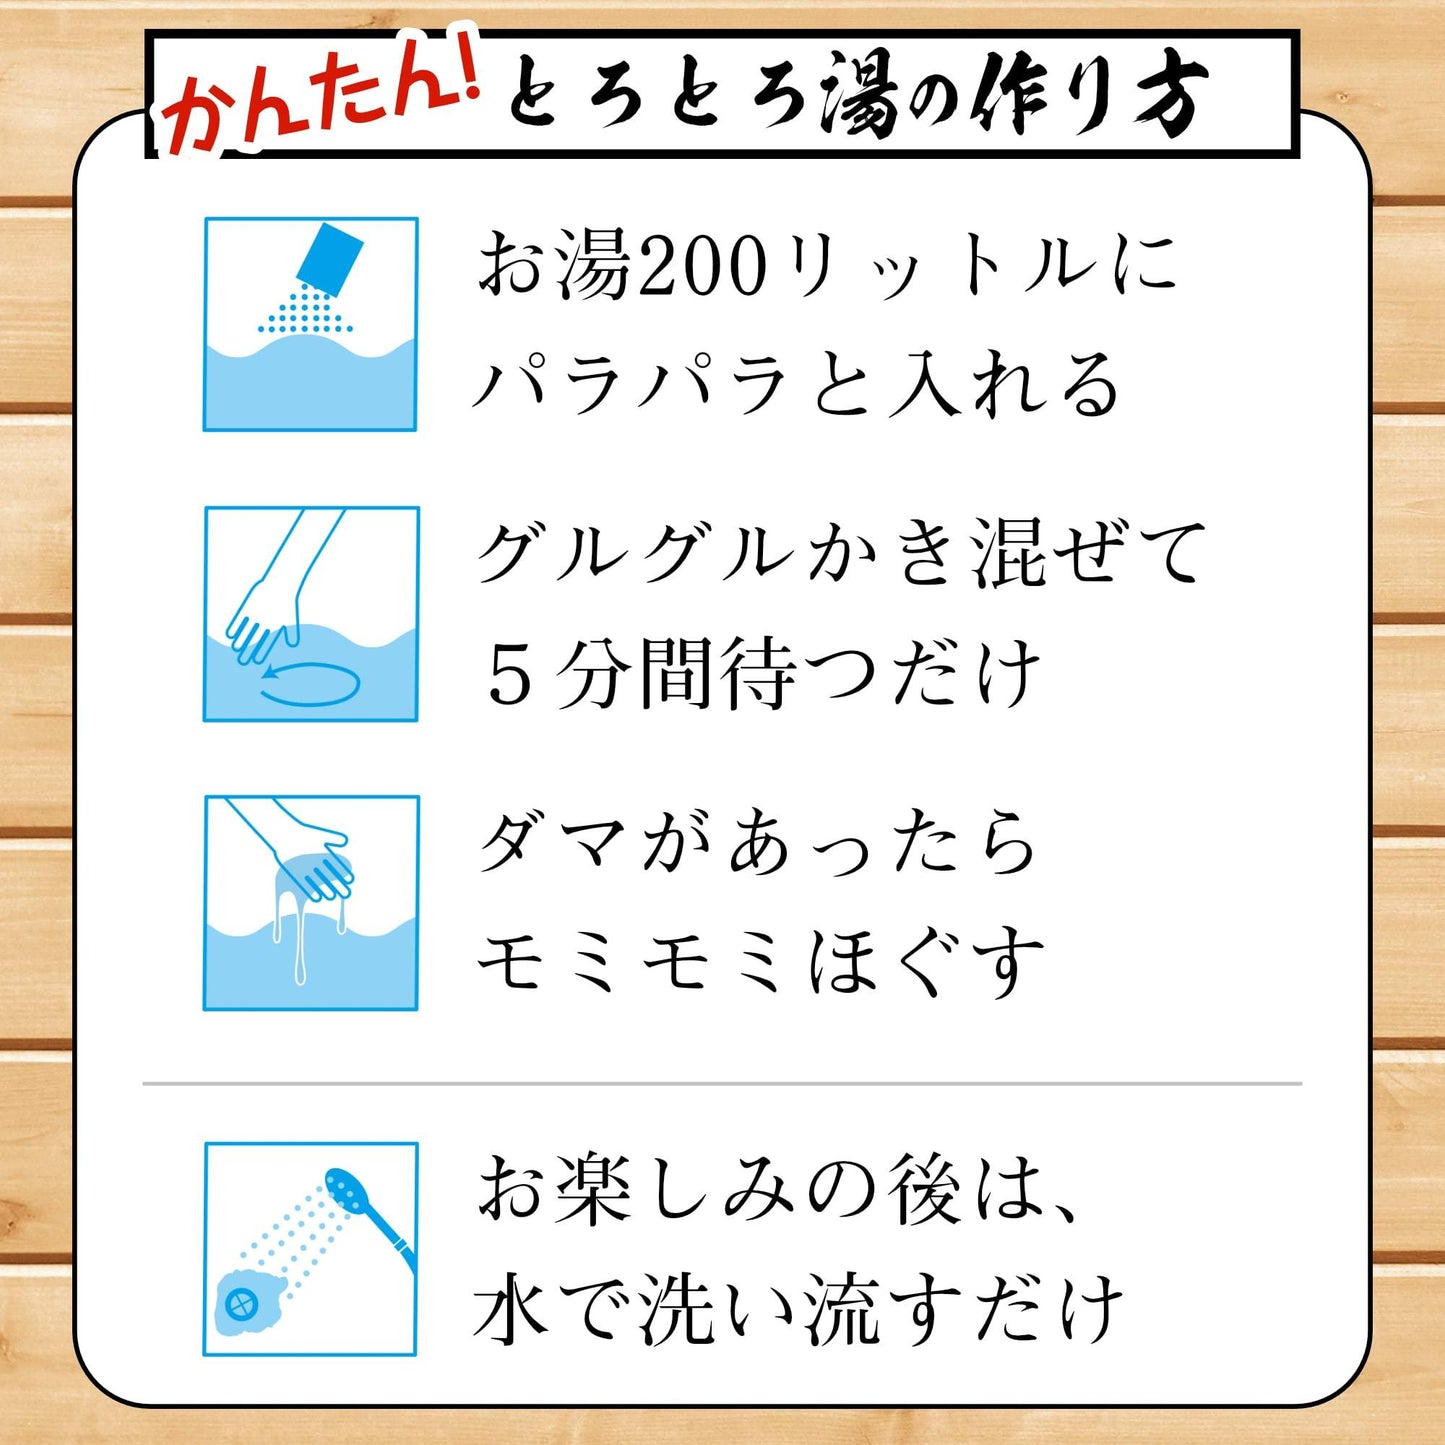 DNA JAPAN 【栃木】Toro Toro 浴室用草莓味溫泉乳液 那須の湯 極 沐浴用品 購買